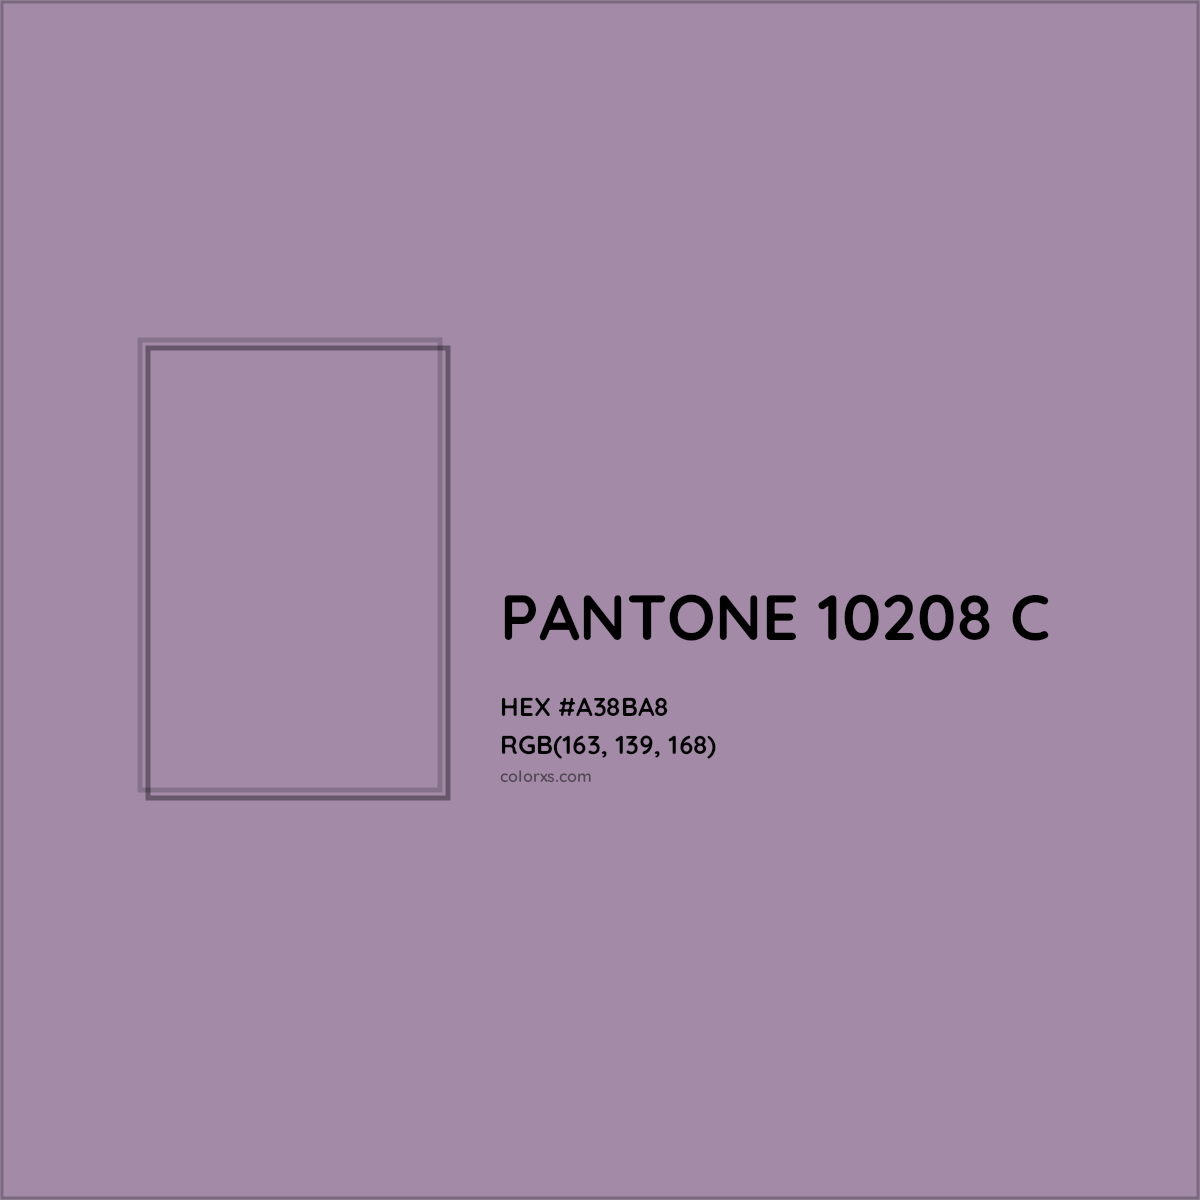 HEX #A38BA8 PANTONE 10208 C CMS Pantone PMS - Color Code